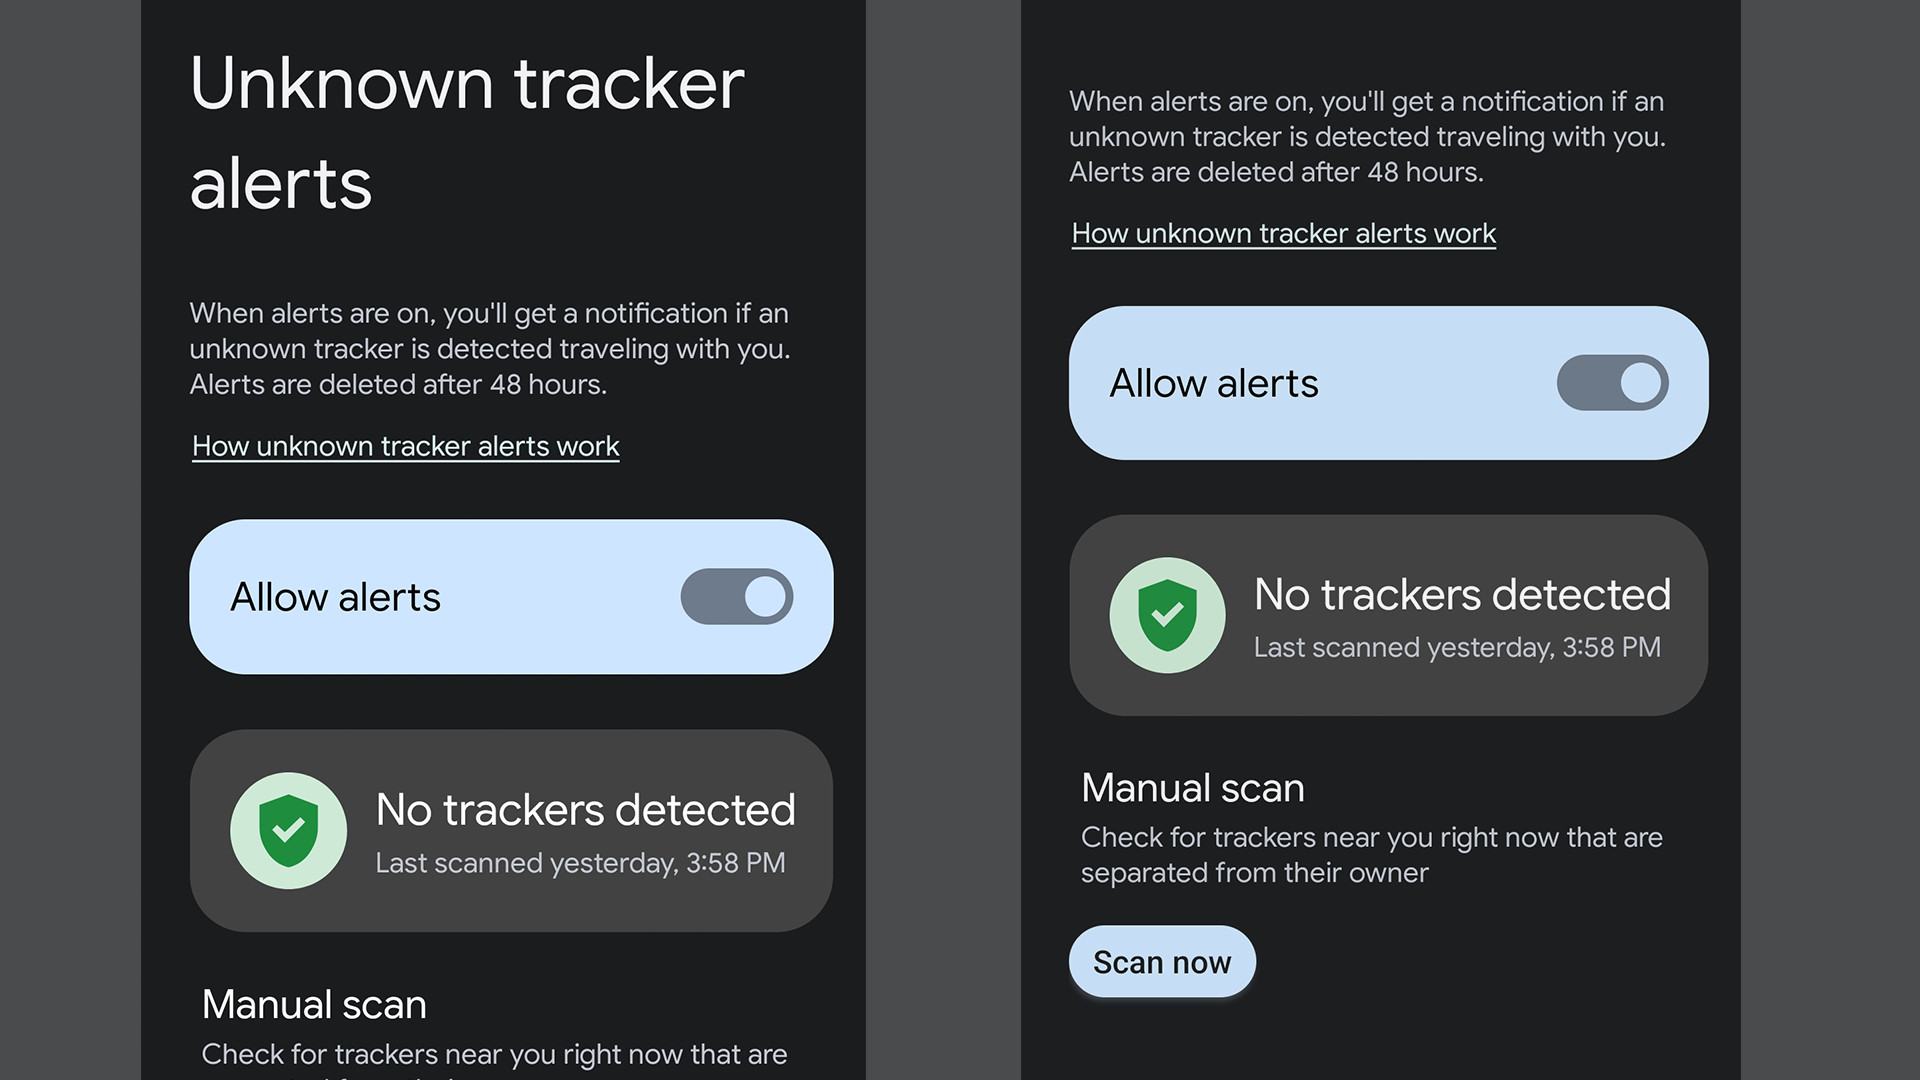 Unknown tracker alert tool